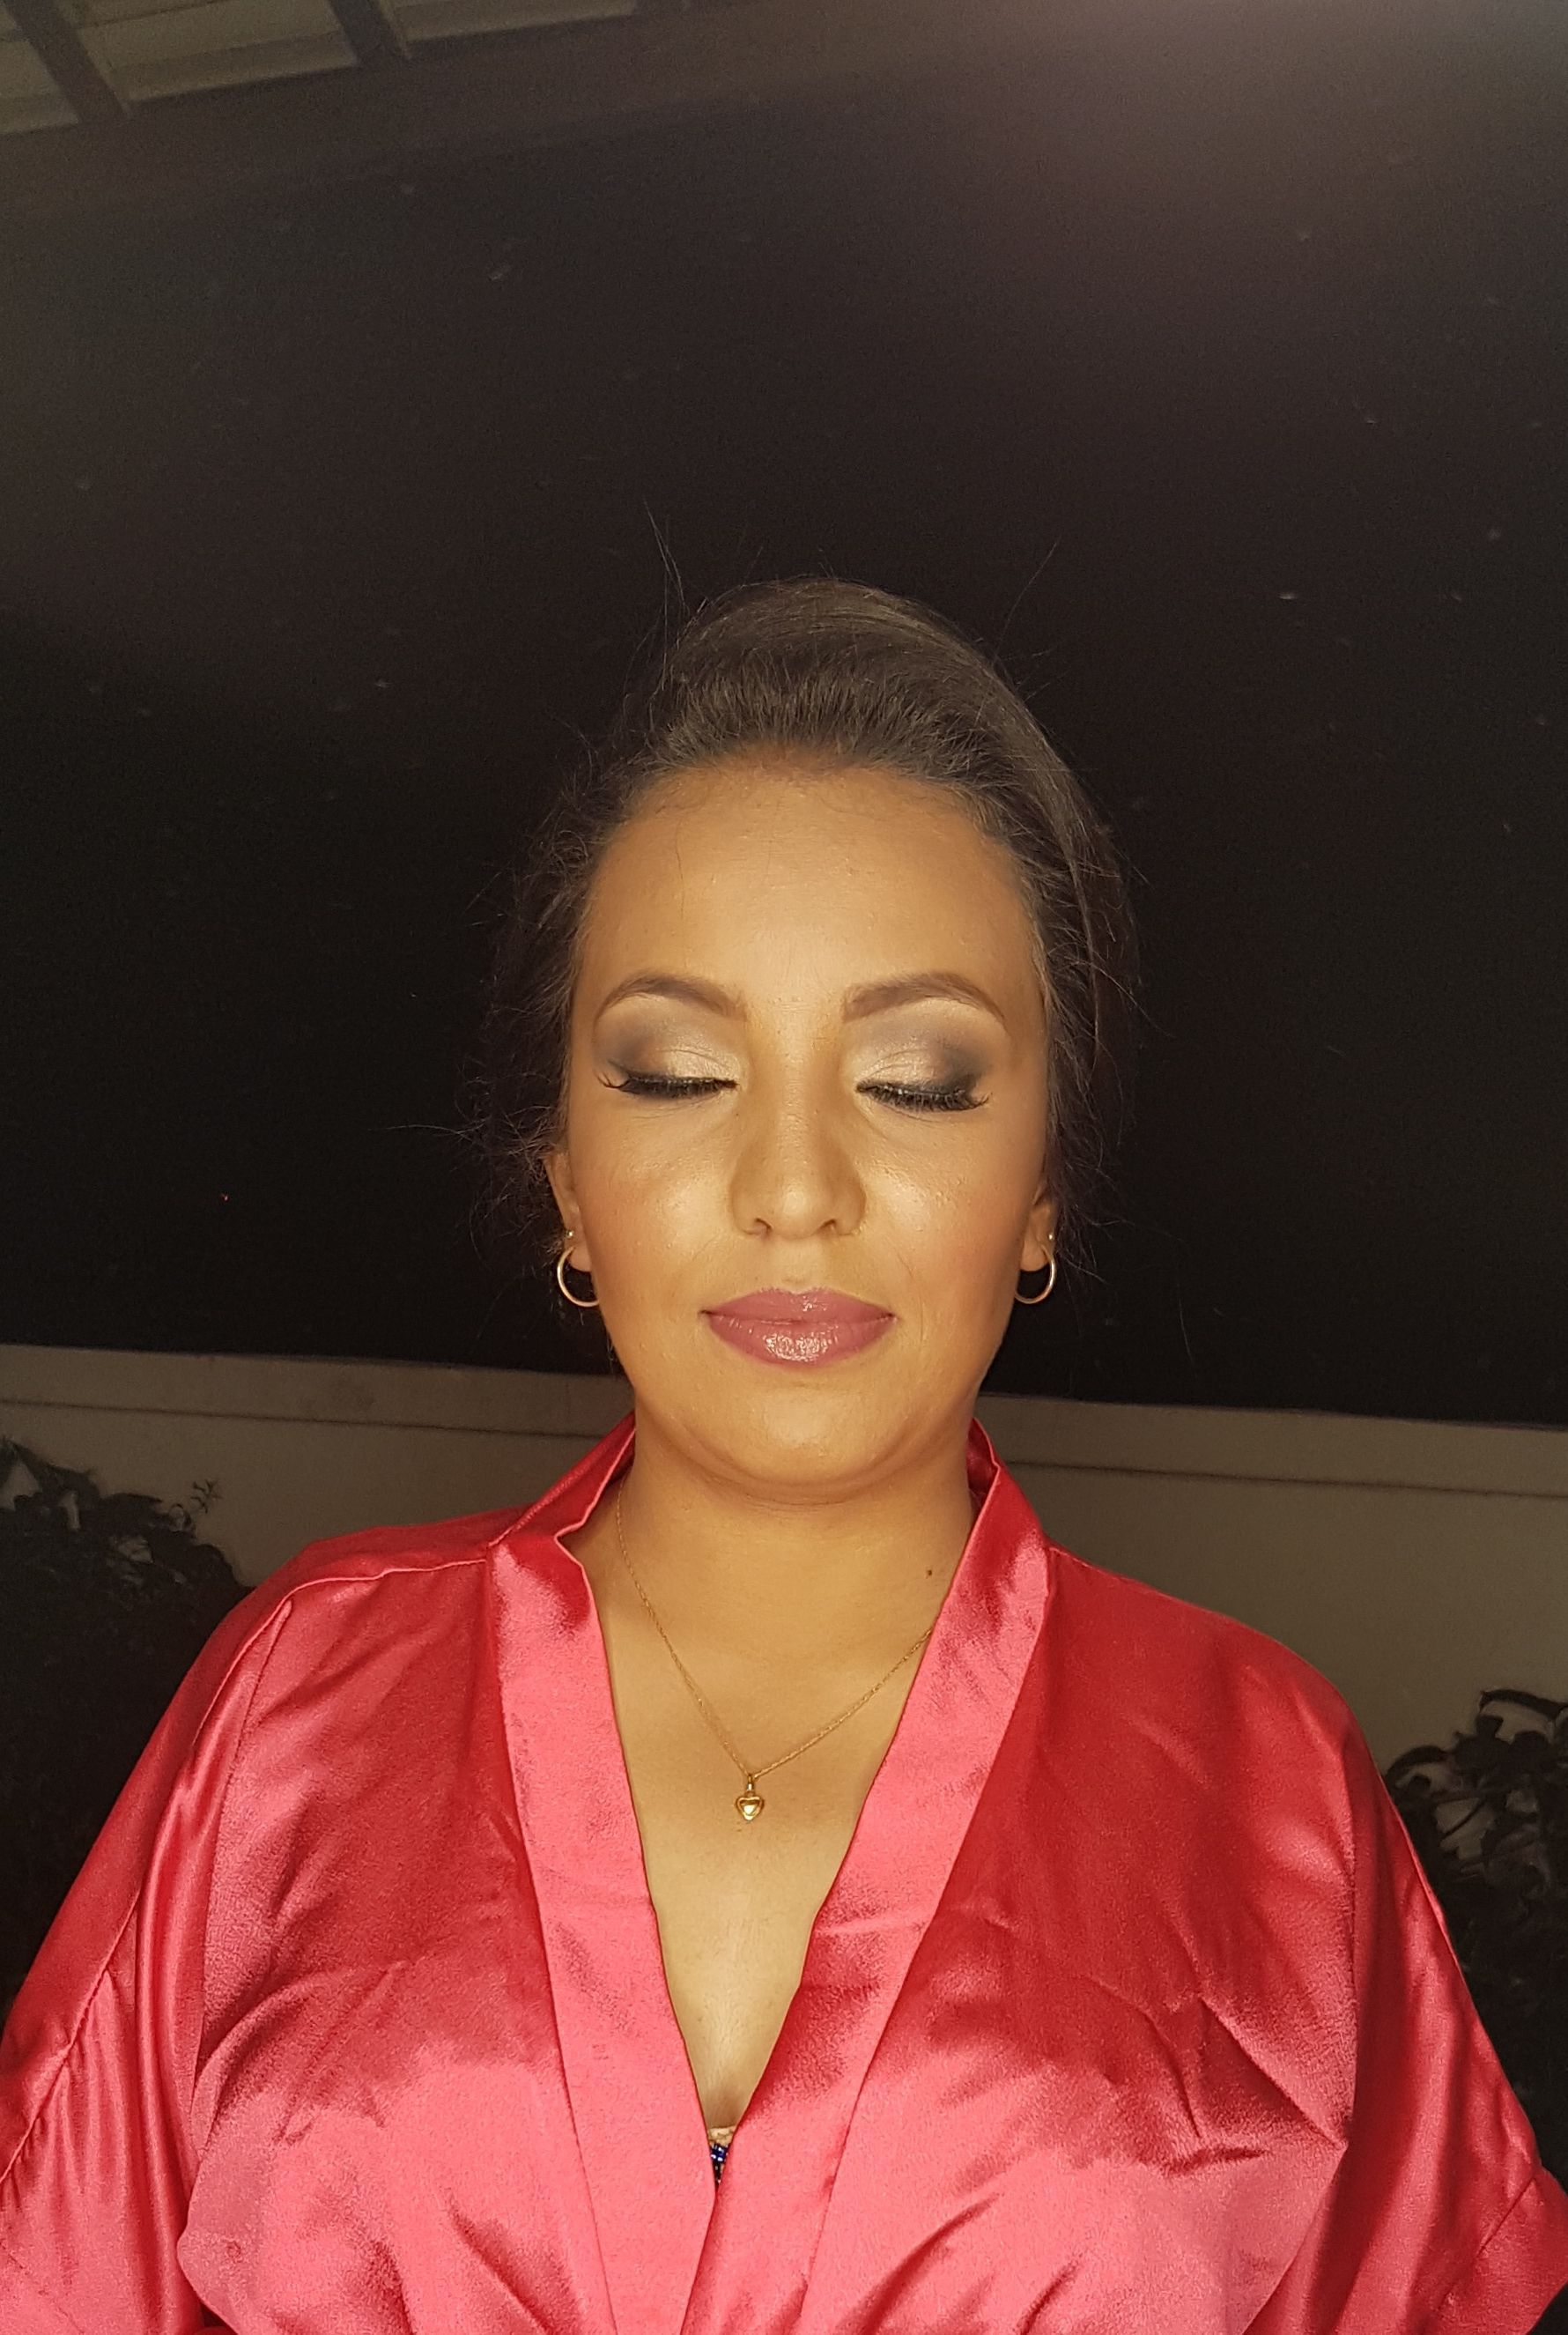 #barbaraganem #maquiadora #visagismo #makeup #beautyartist #beautiful #makeupforever #mac #vult #dior #boticario #marykay #sisley #sigma #kryolan #tracta #pausaparafeminice #hudabeauty #anastasiabervelyhills #artdeco #bourjoisparis #chanel #clarins #clinique #givenchy #lorealparis #lancome #revlon #yvessaintlaurent #shiseido #olay #covergirl #oriflame #maybelline #avon #natura #becca maquiagem maquiador(a) stylist / visagista